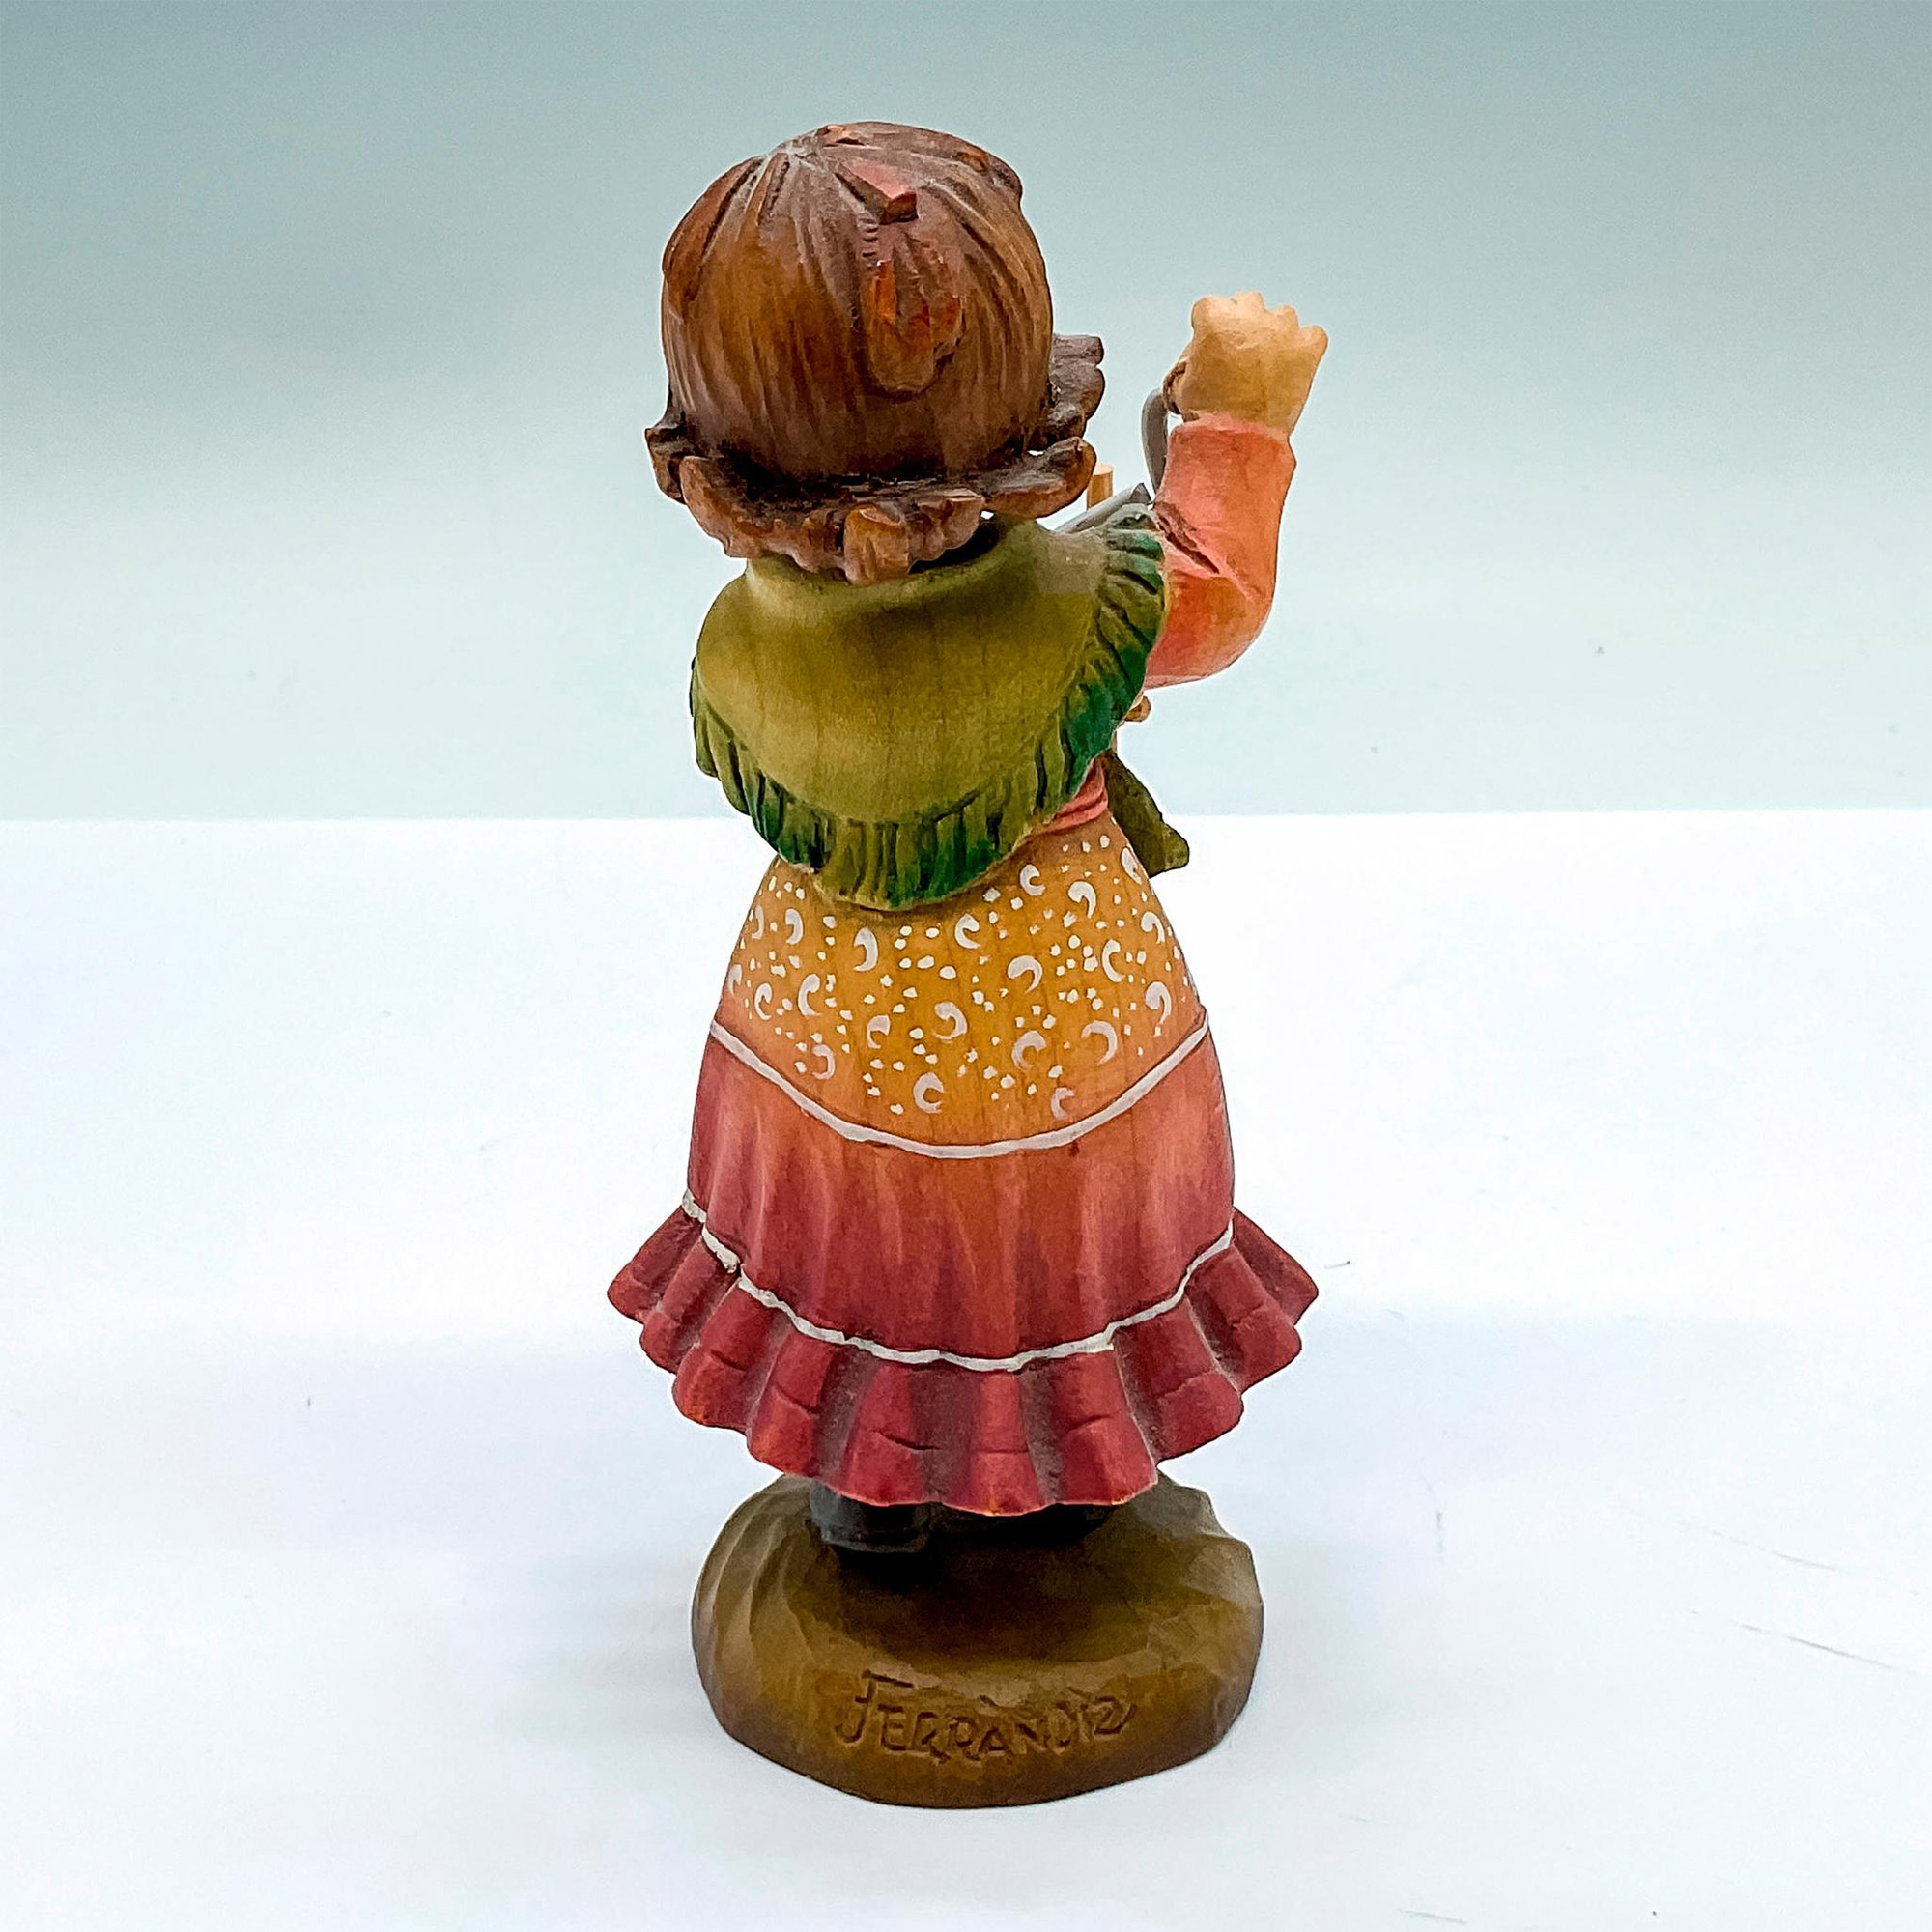 Anri Italian Wooden Figurine by Ferrandiz, Tiny Sounds - Image 2 of 4